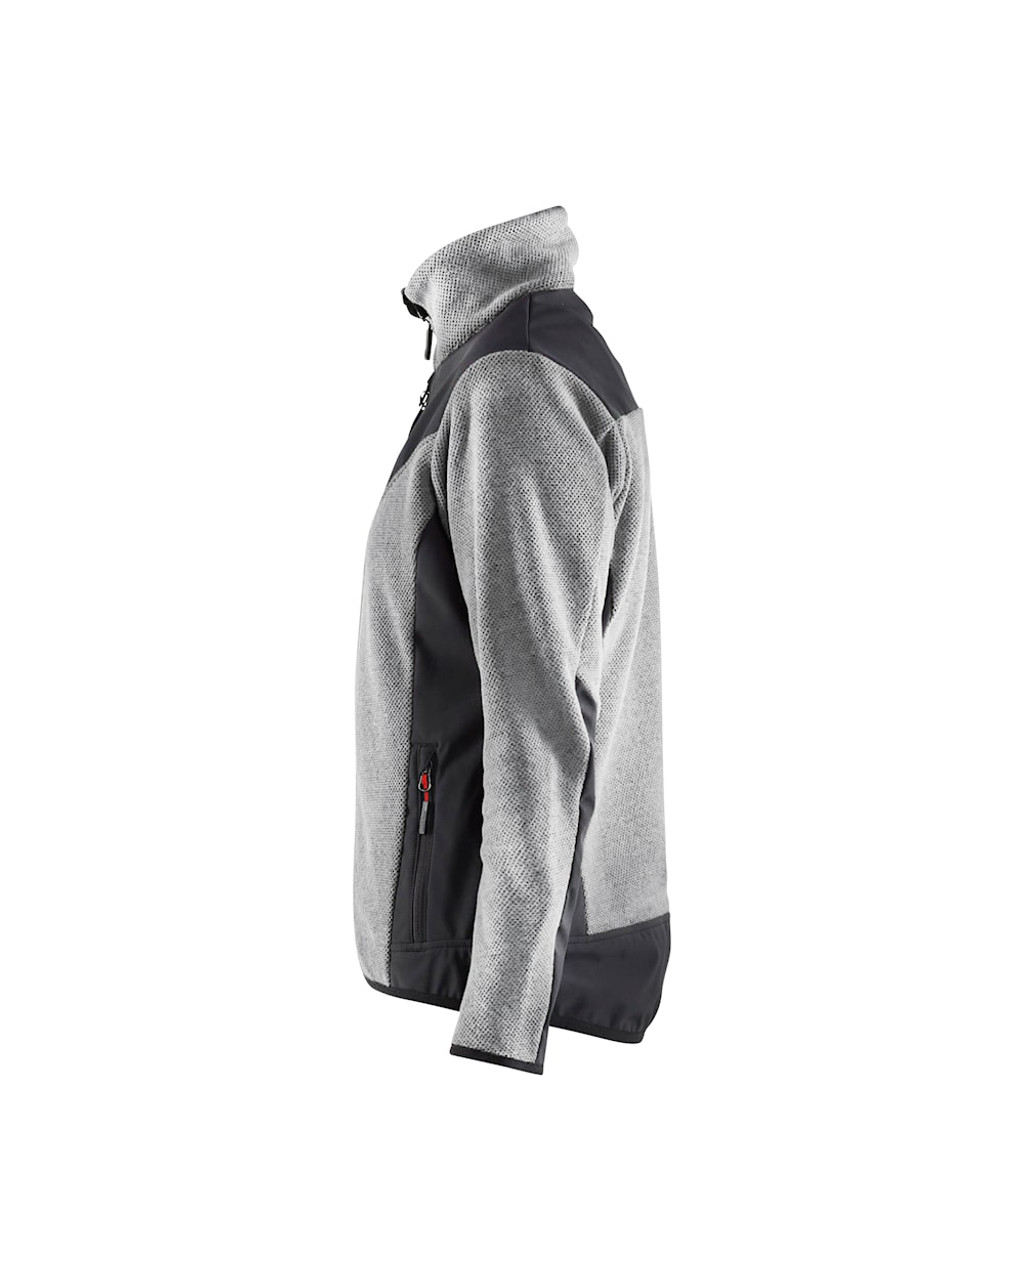 BLAKLADER Jacket | 5943 Womens Grey Melange /Black Jacket Knitted with Full Zip in Polyester Fleece